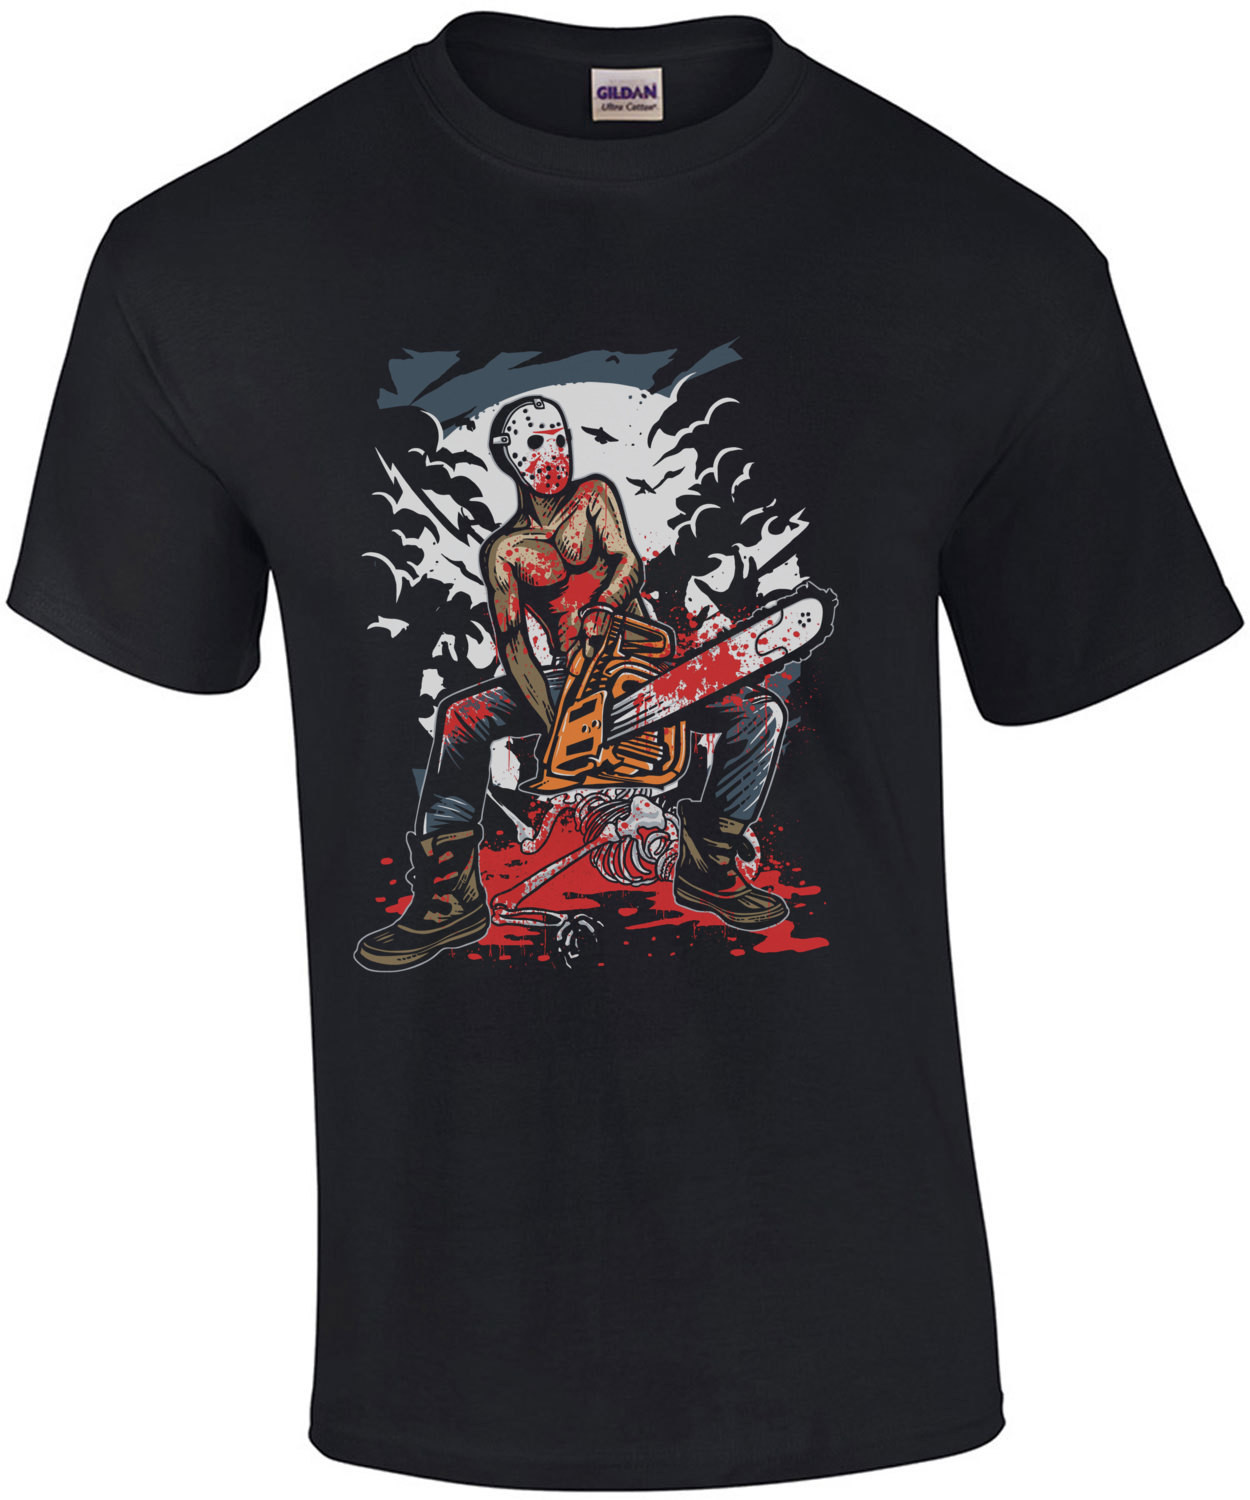 Chainsaw Killer Graphic T-Shirt